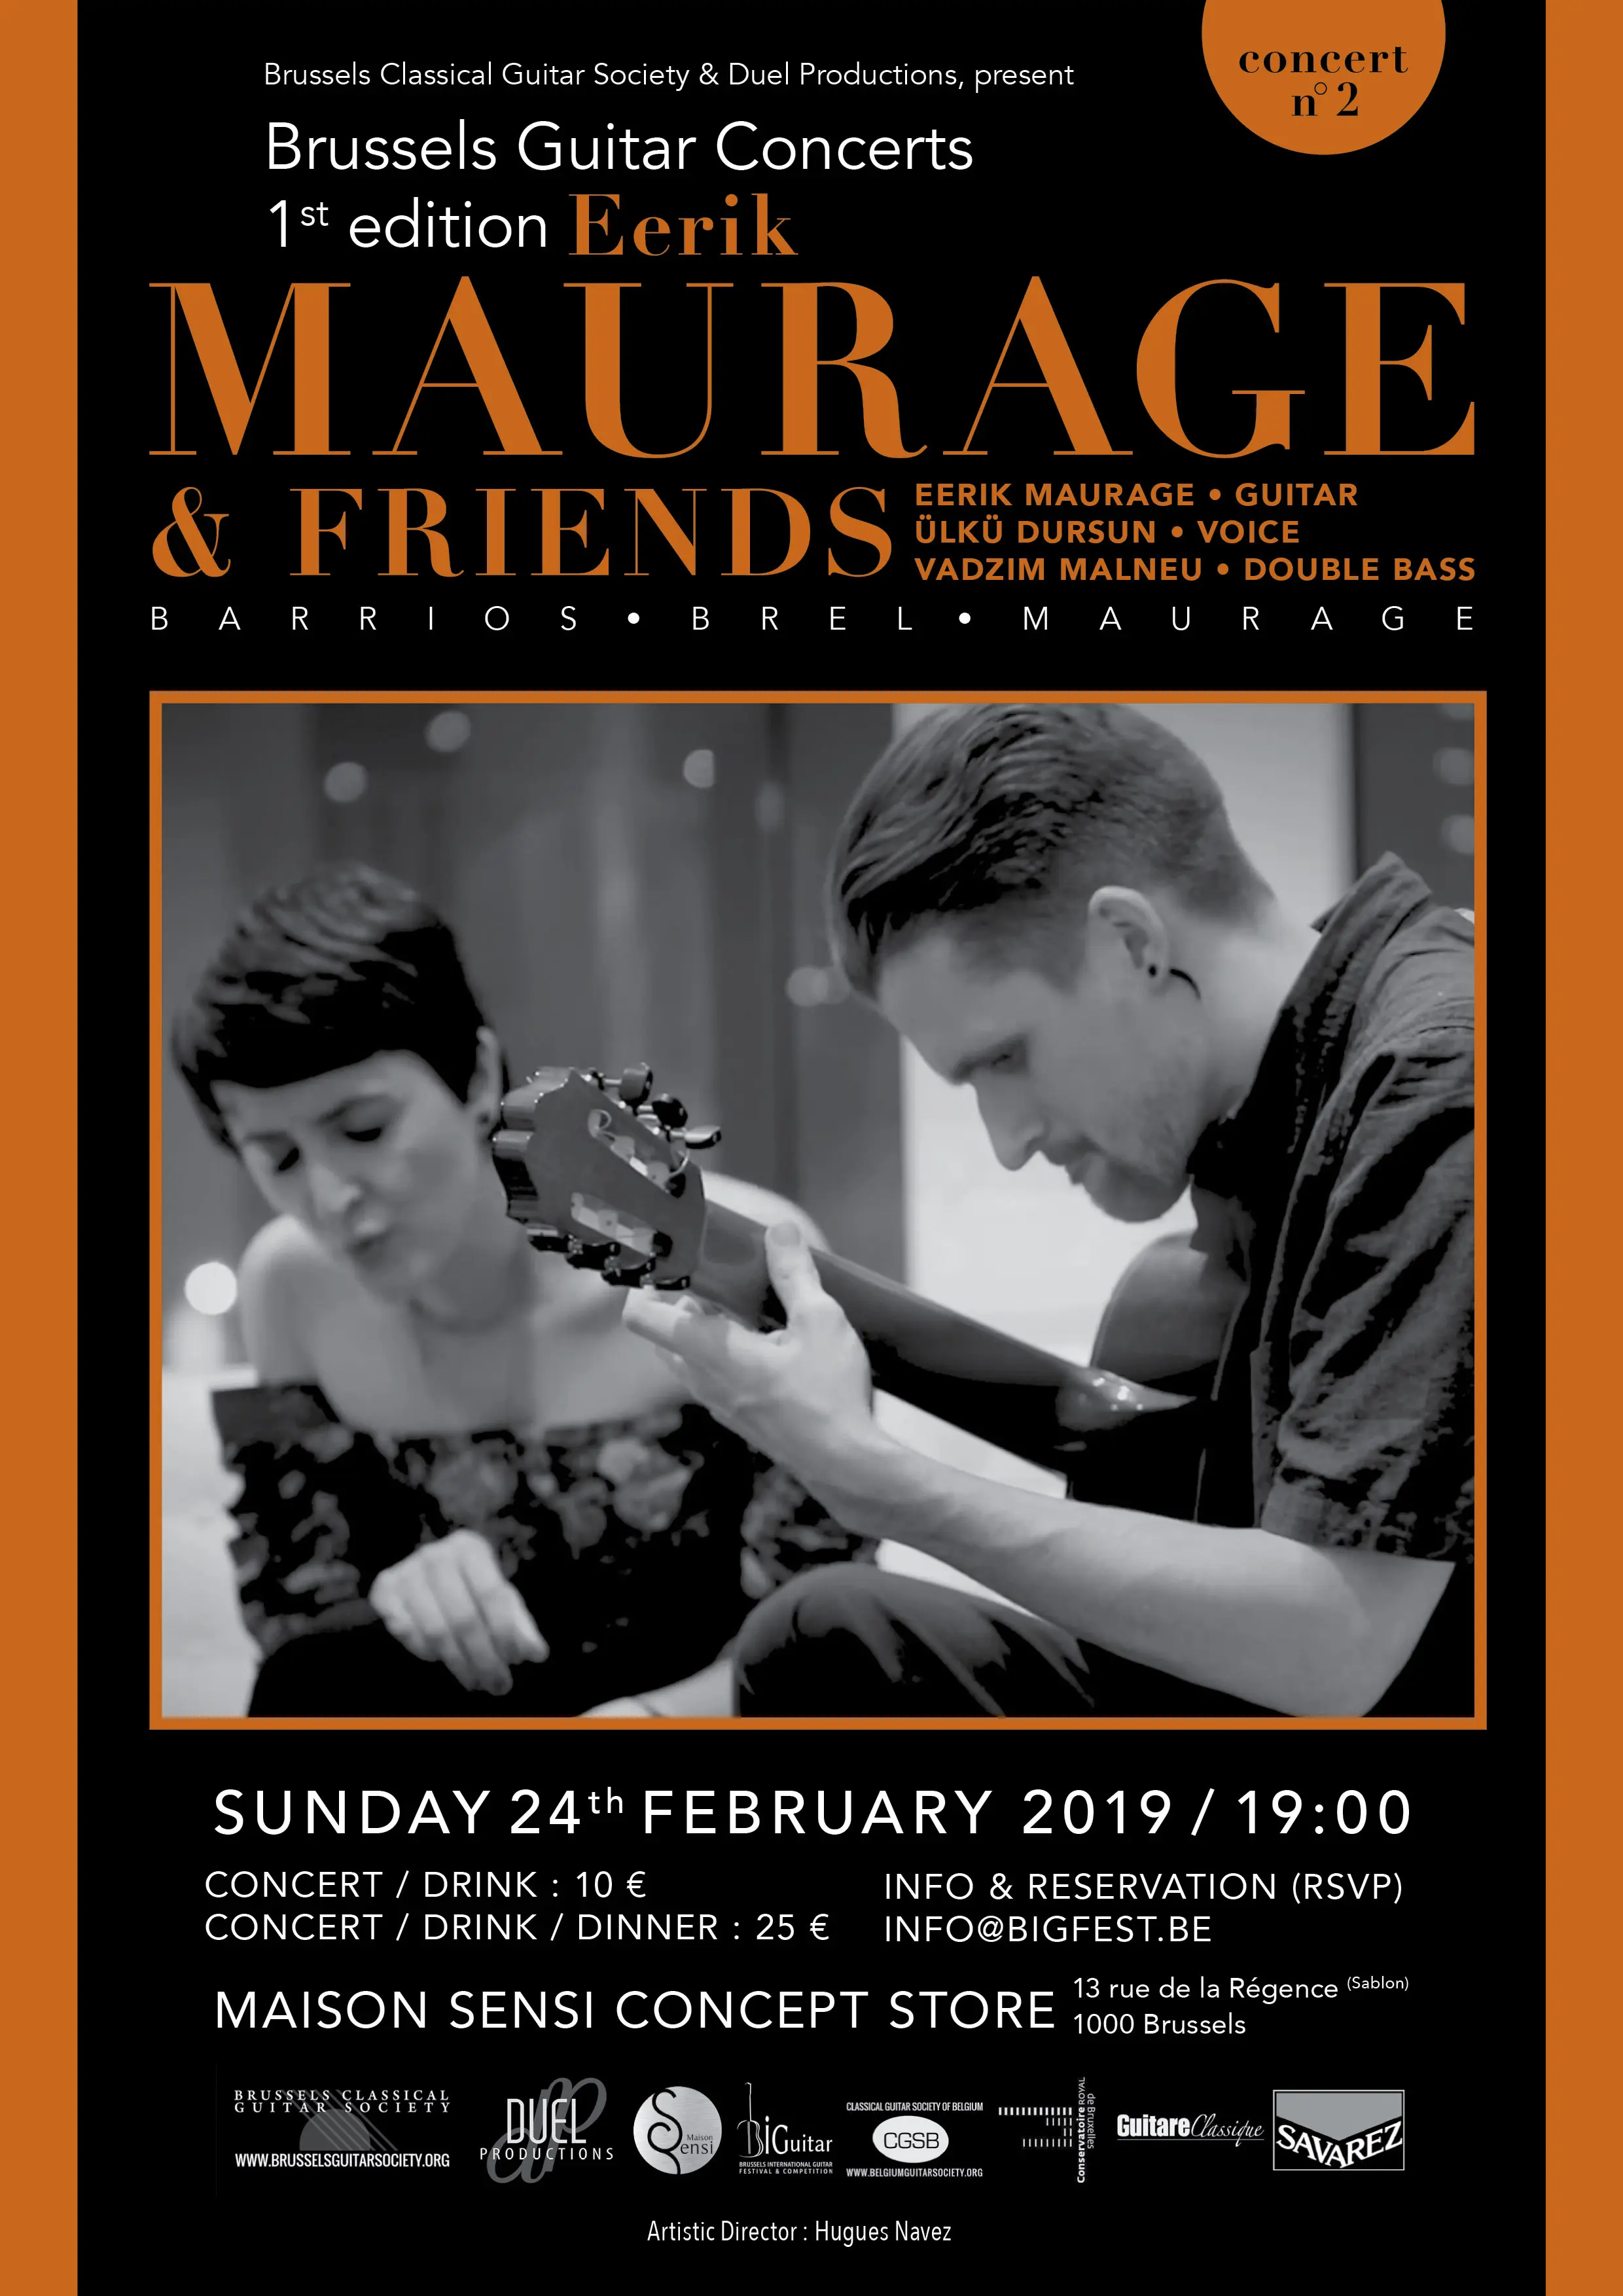 Eerik Maurage - « Eerik Maurage & Friends » - Brussels Guitar Concerts